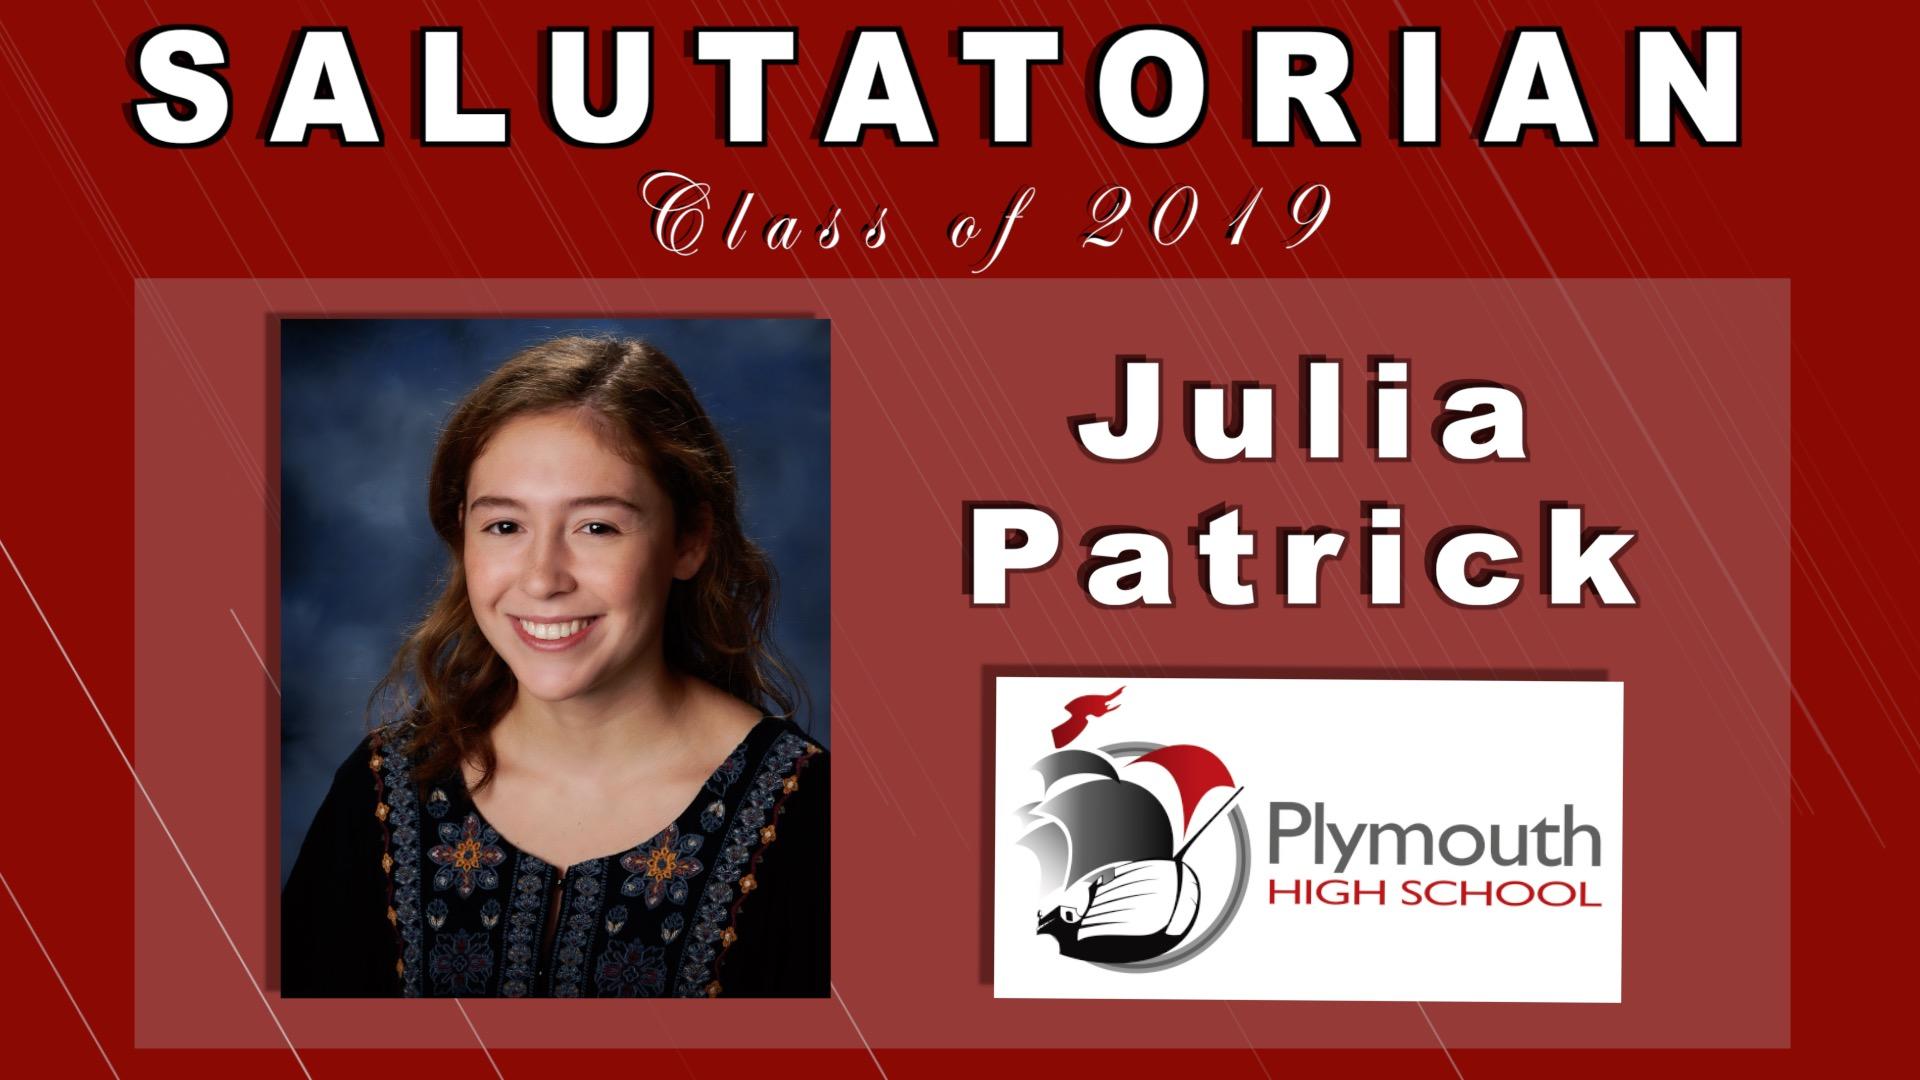 Salutatorian Class of 2019 Julia Patrich with Plymouth High School logo